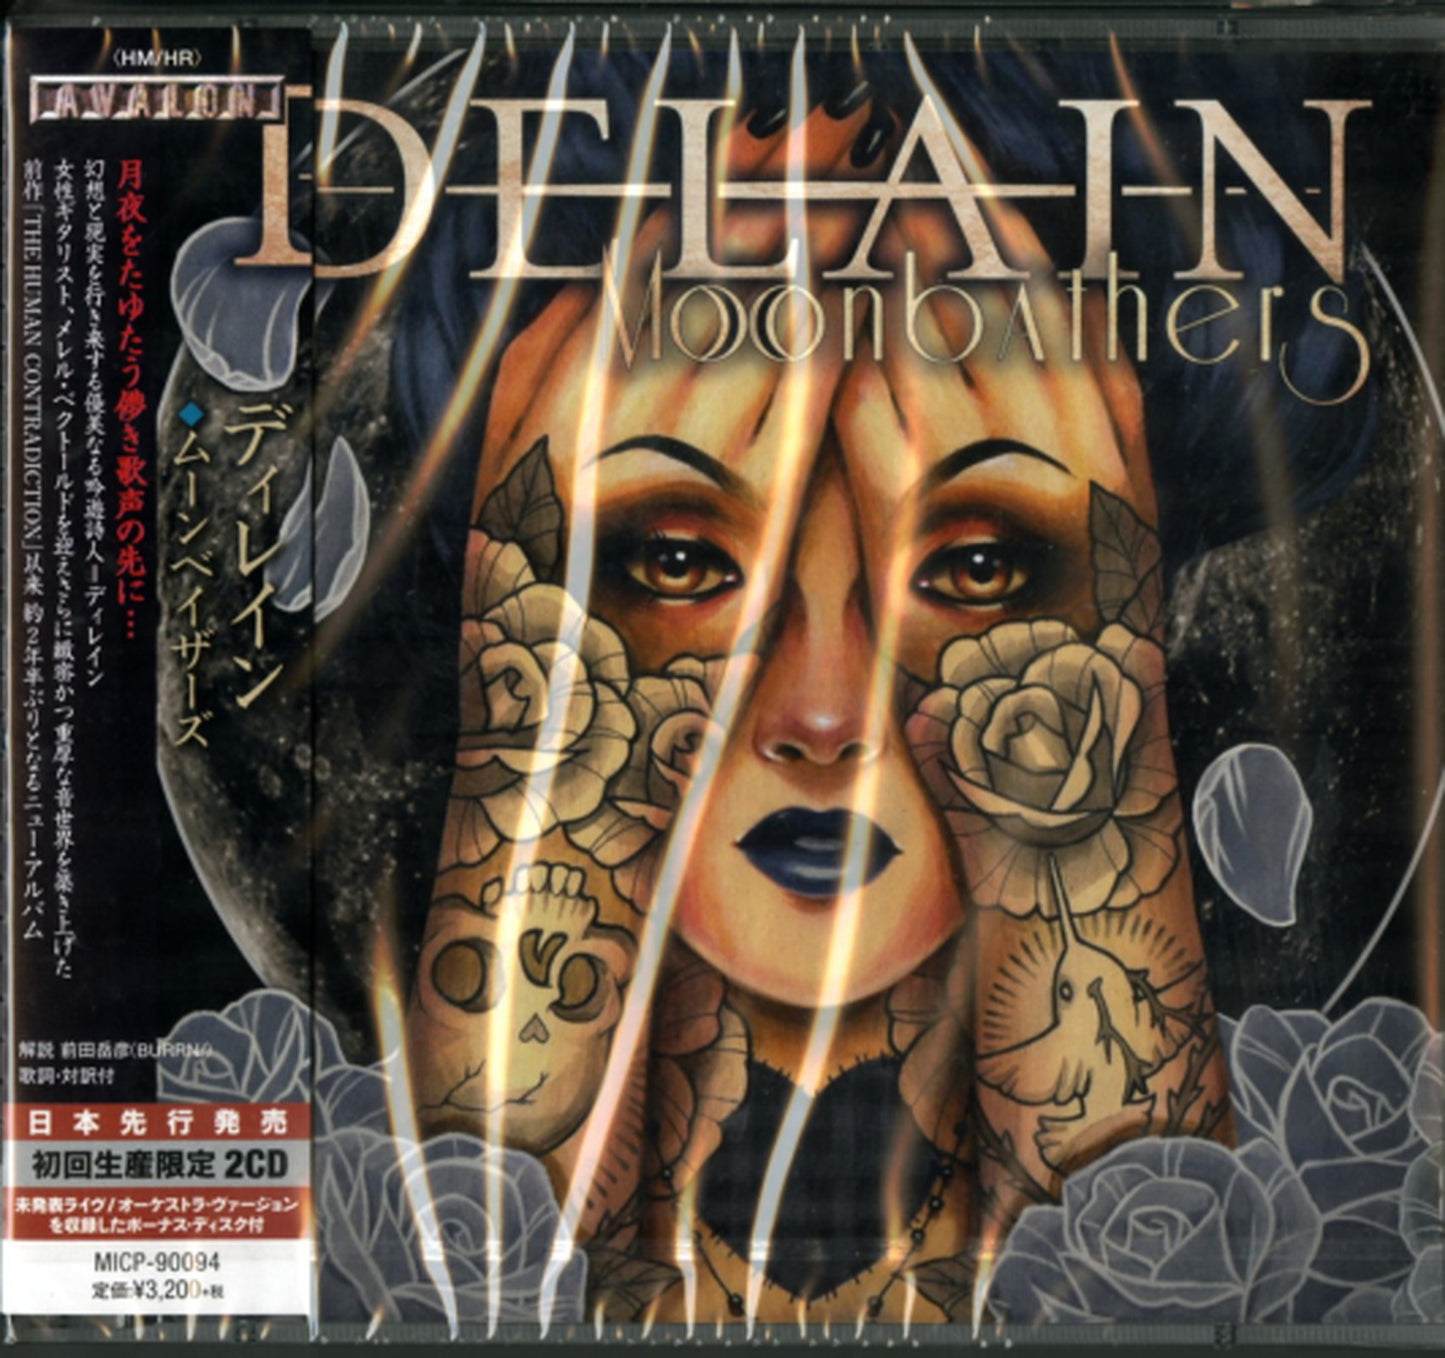 Delain - Moonbathers - Japan  2 CD